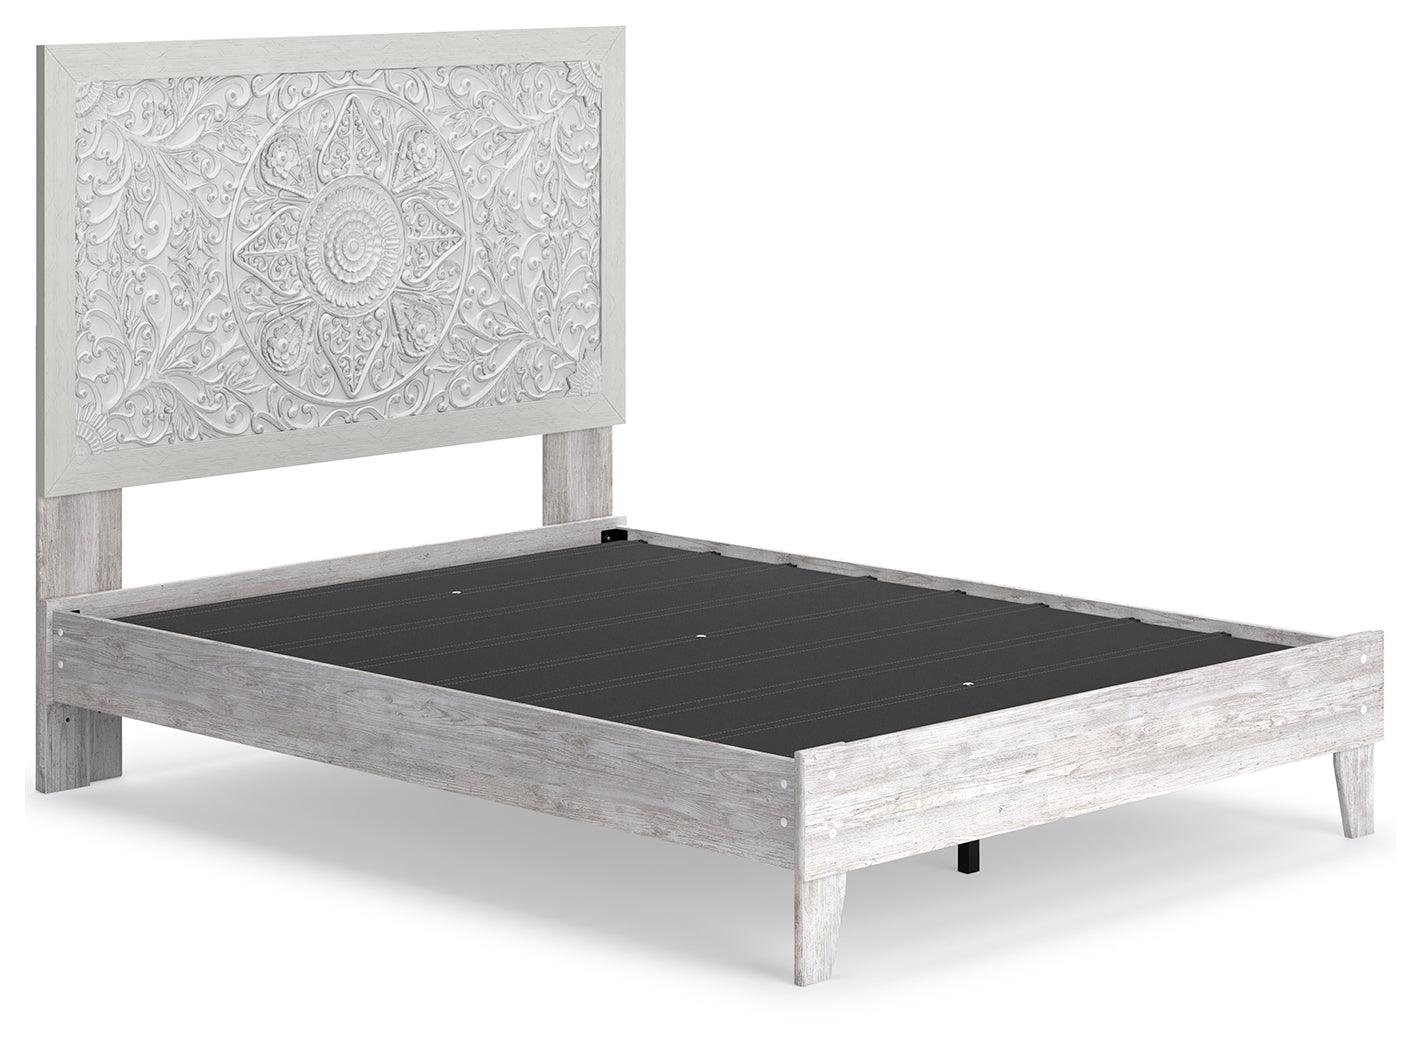 Paxberry Whitewash Queen Panel Platform Bed